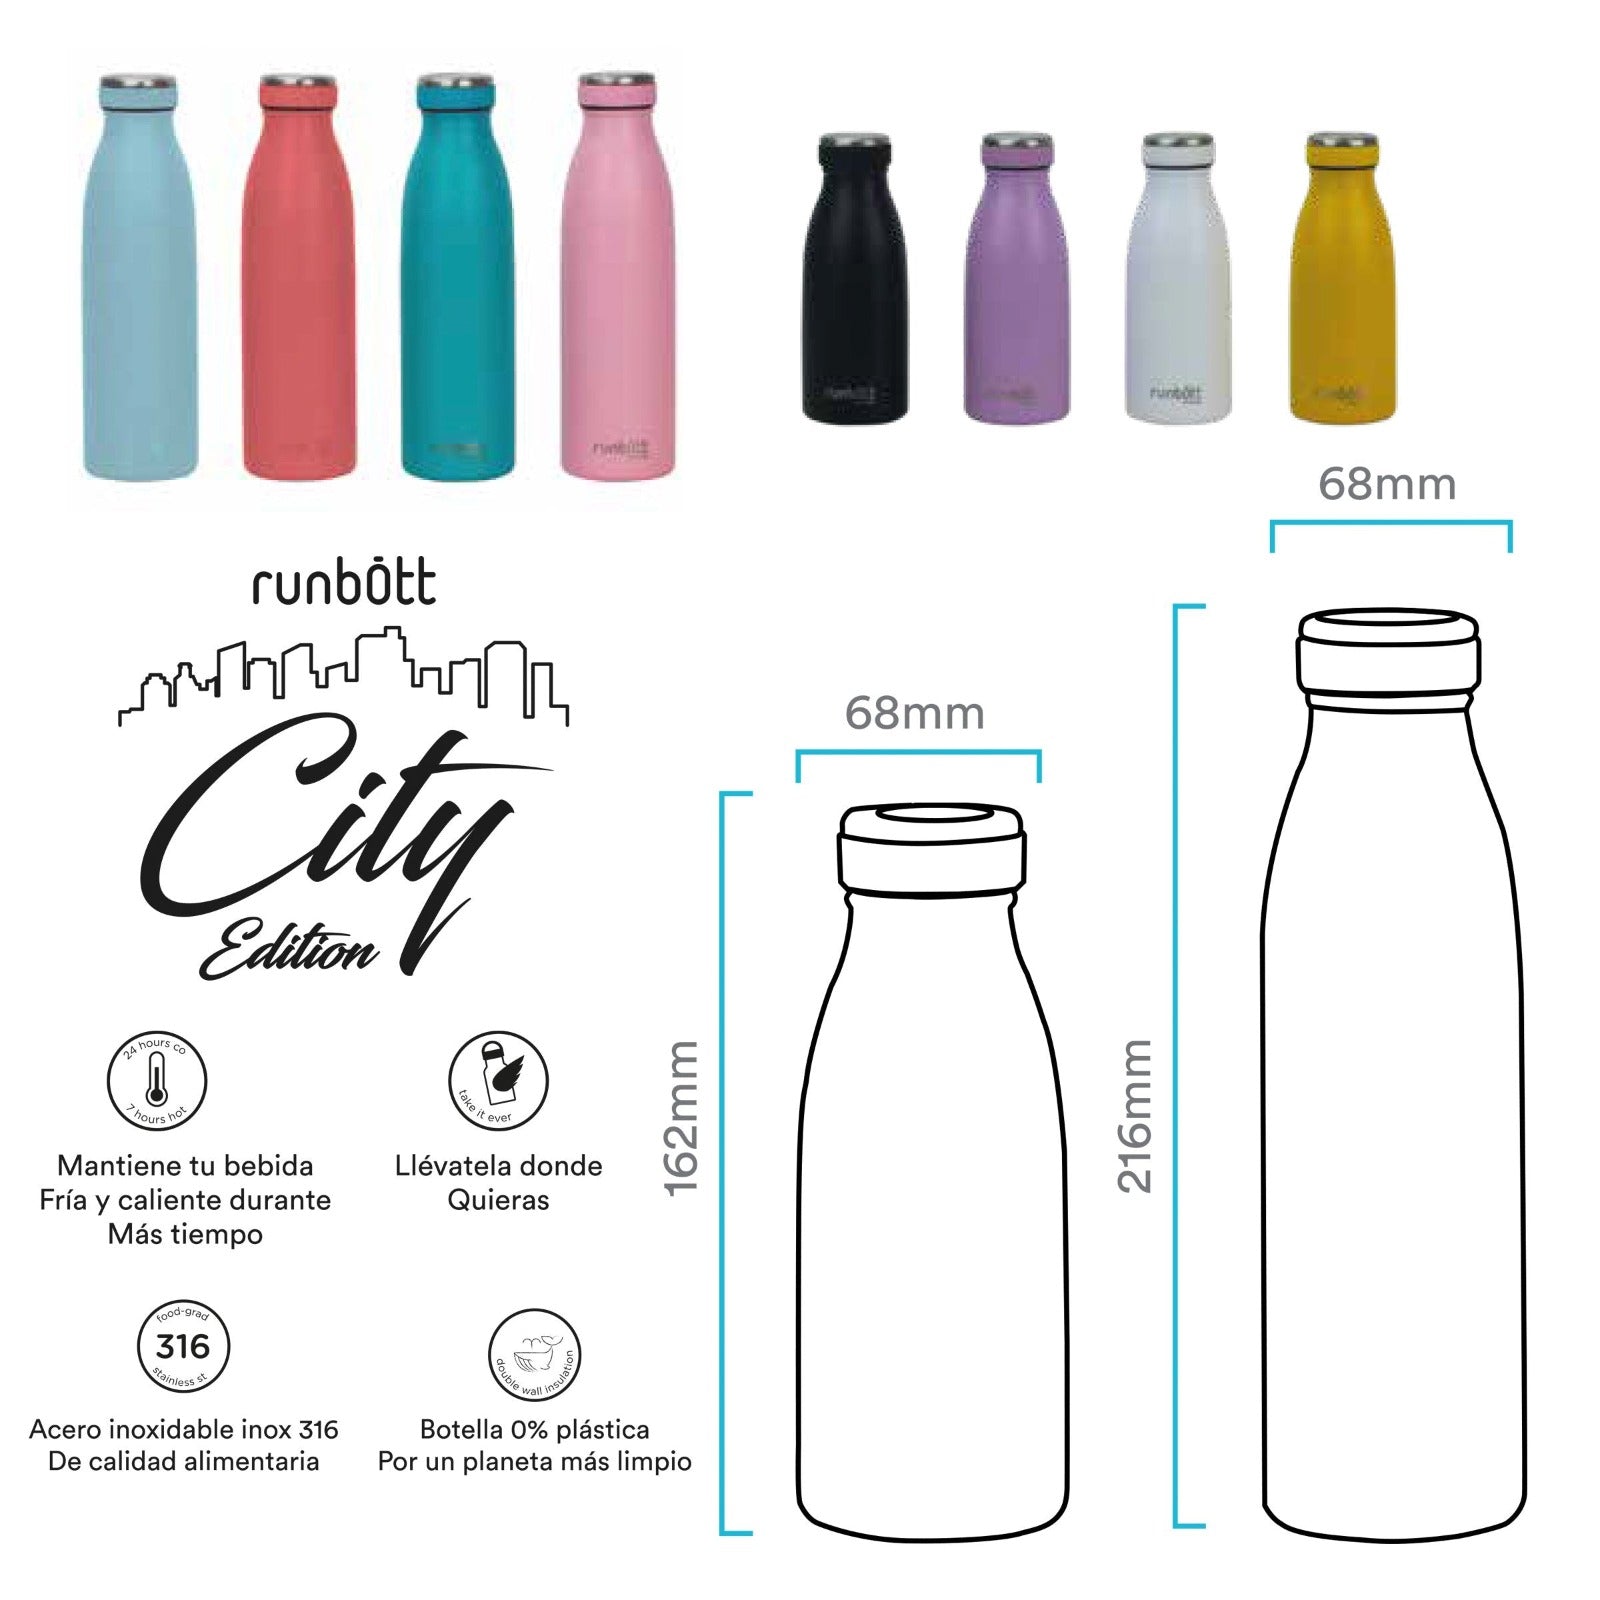 Runbott City - Botella Térmica de 0.5L en Acero Inoxidable 316 y Silic